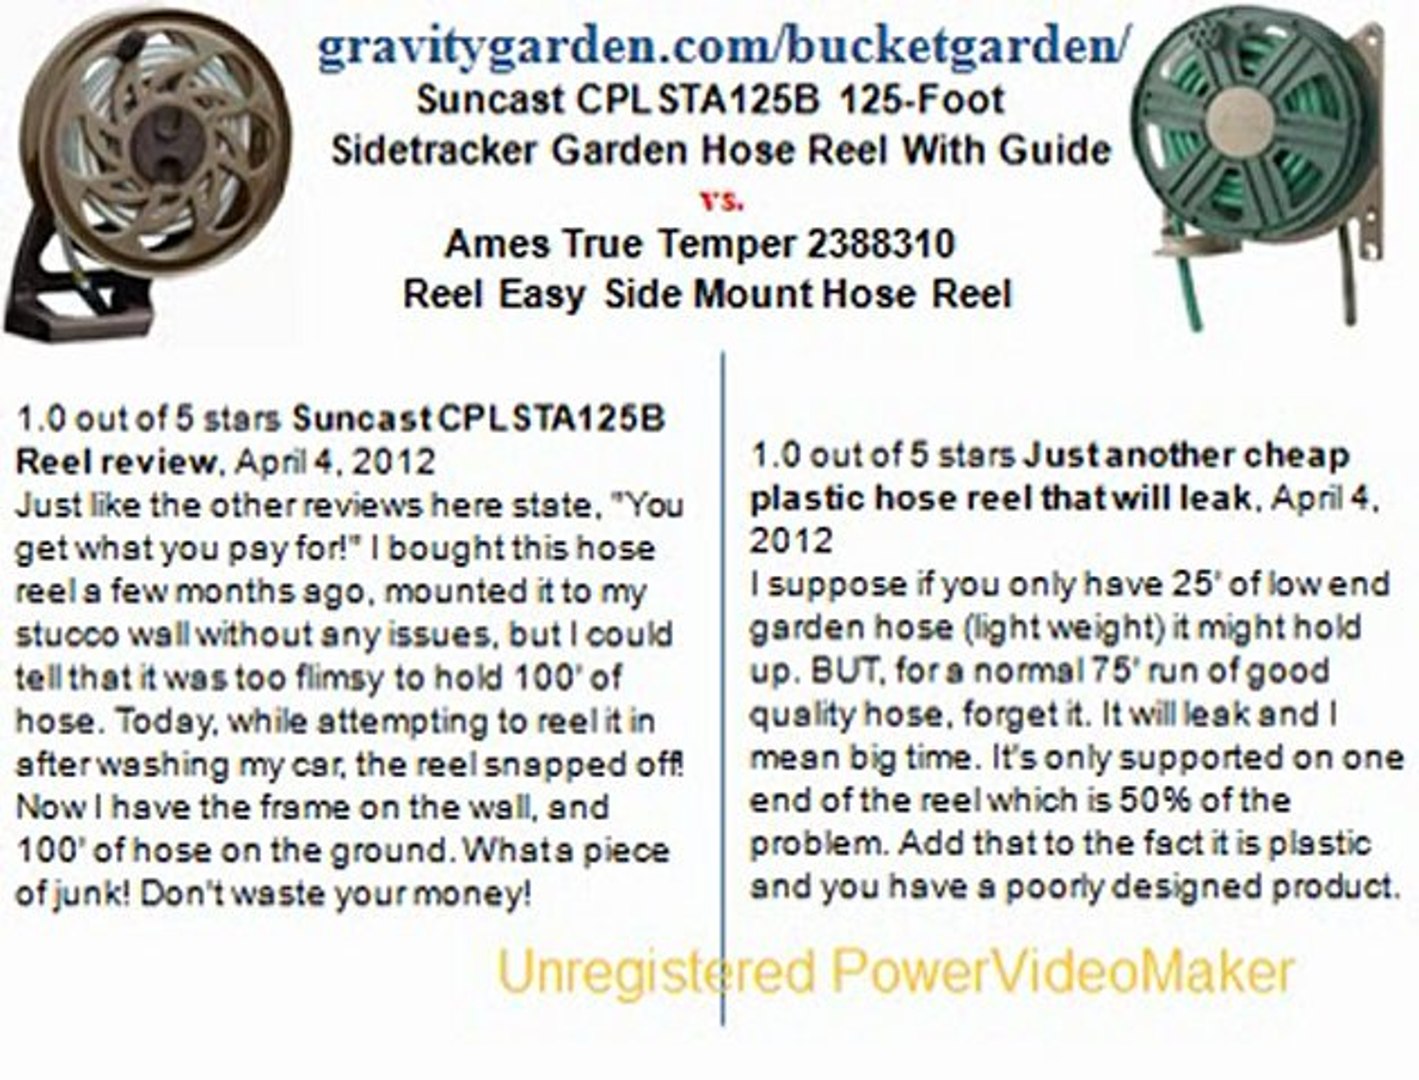 Suncast CPLSTA125B 125-Foot Sidetracker Garden Hose Reel With